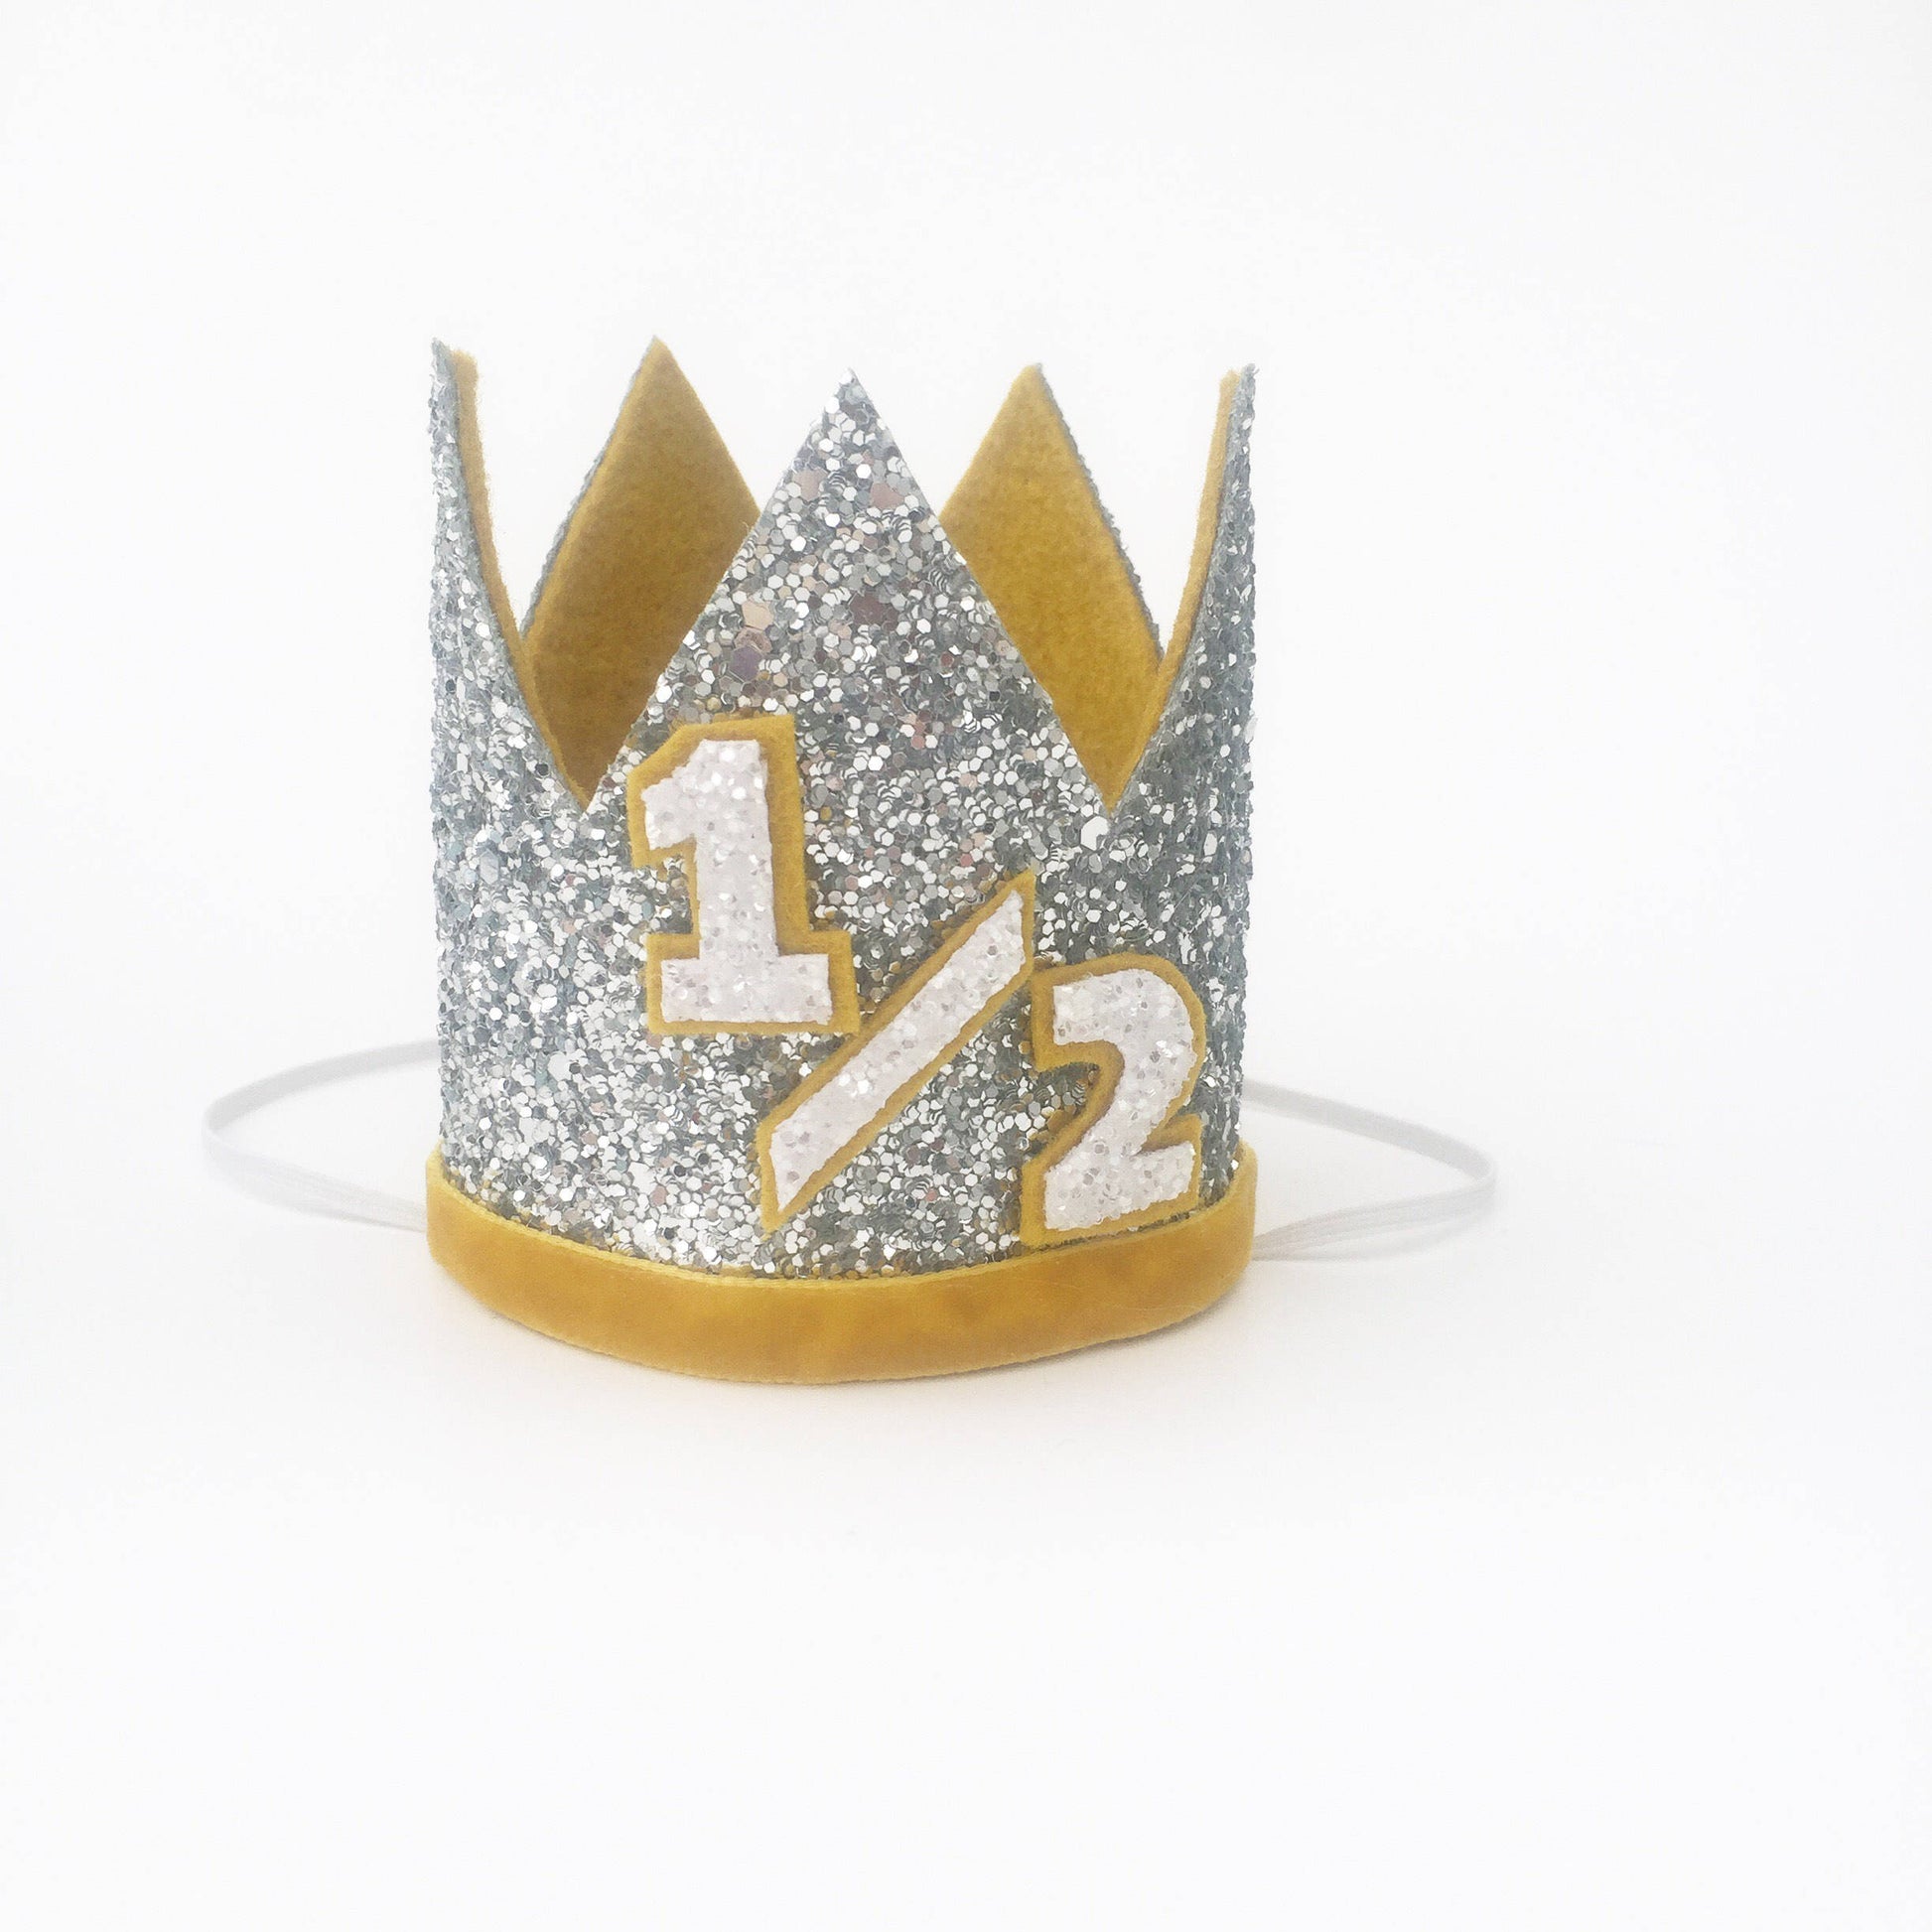 Silver glitter crown with mustard felt